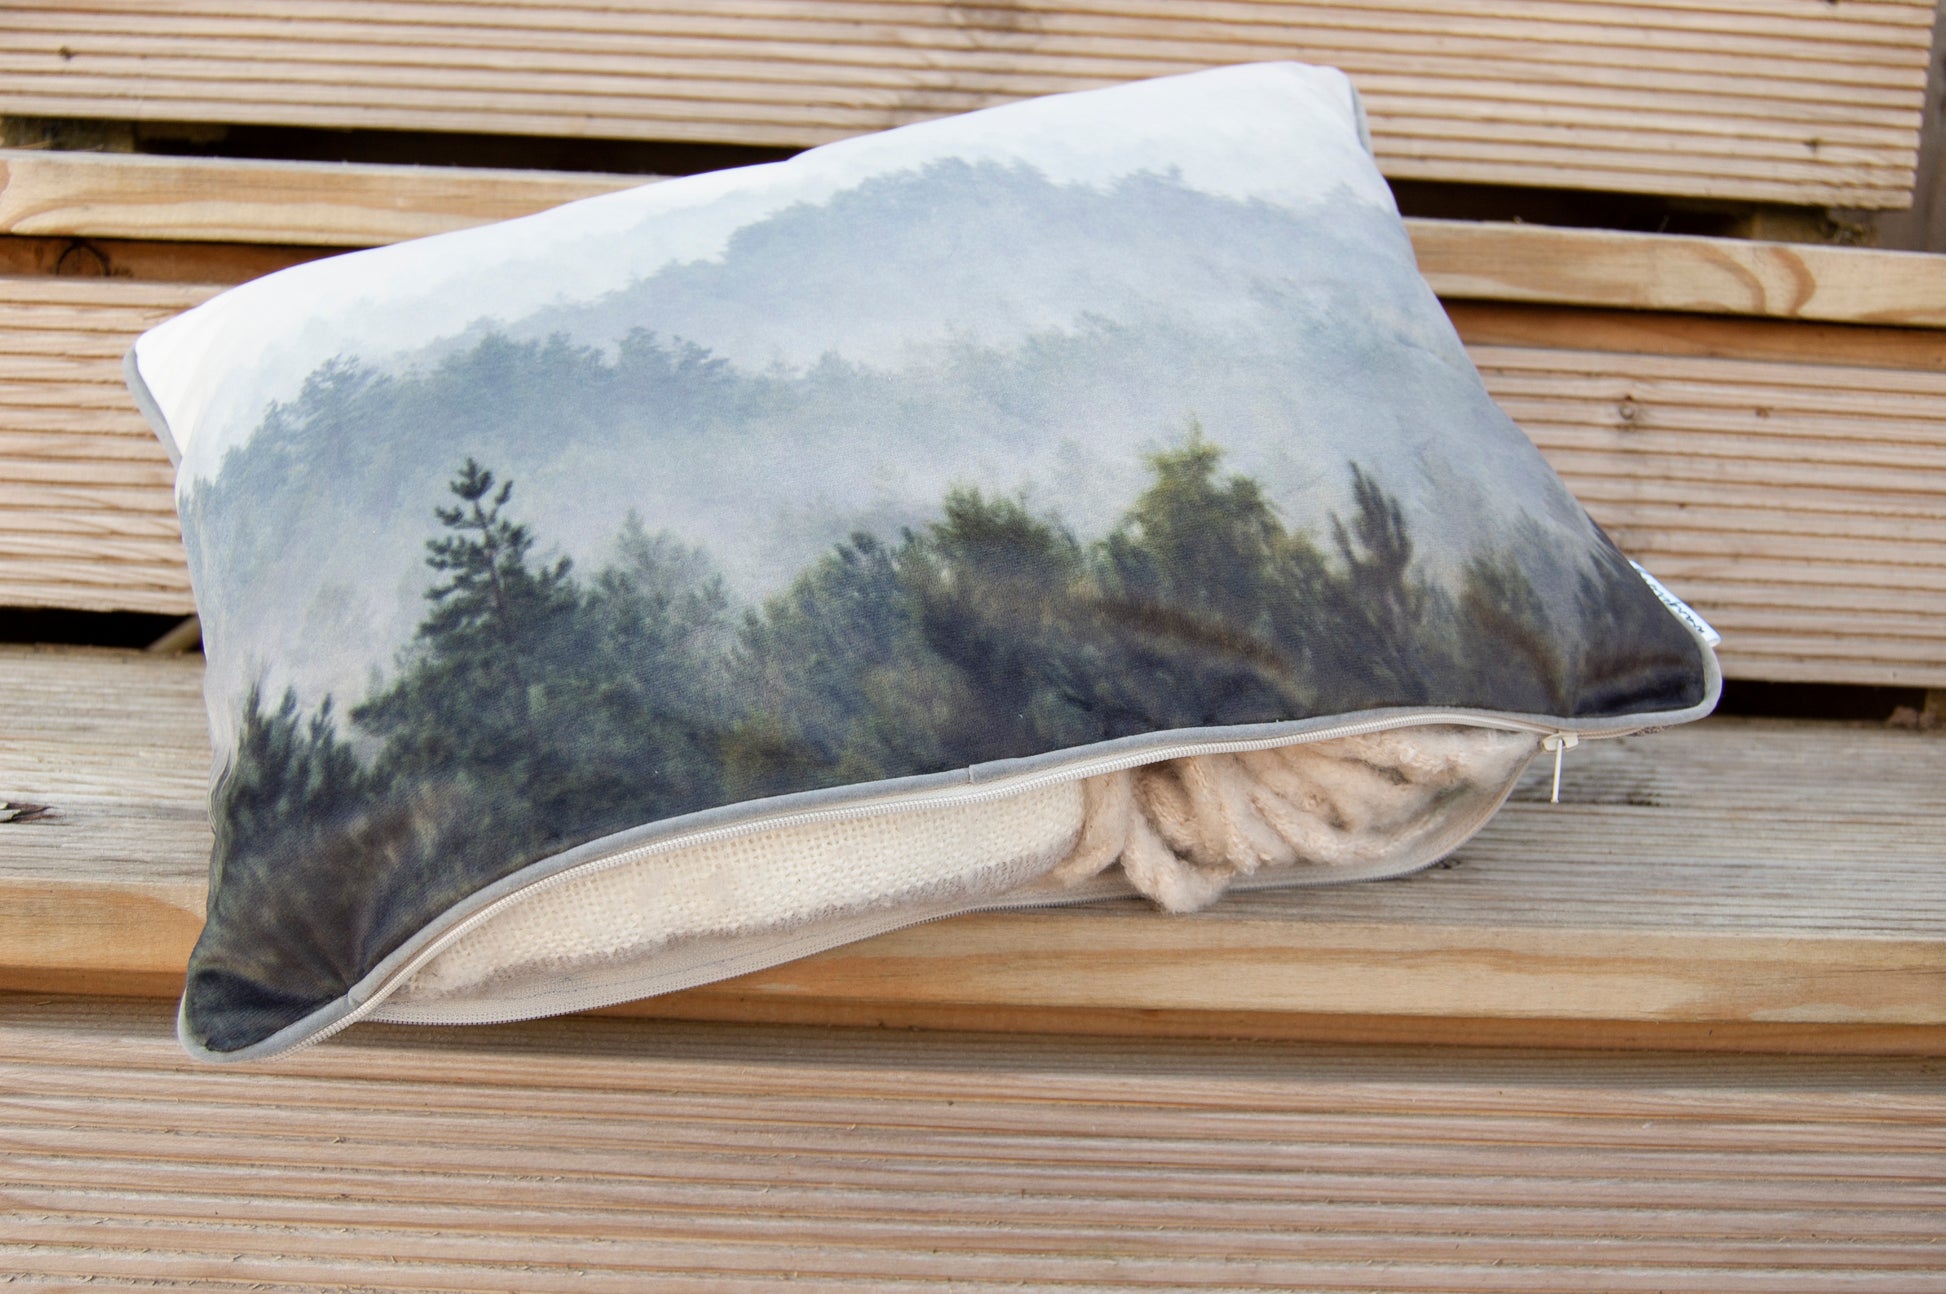 Velvet Cushion cover / Storage pods - Misty Forest - WanderbugUK